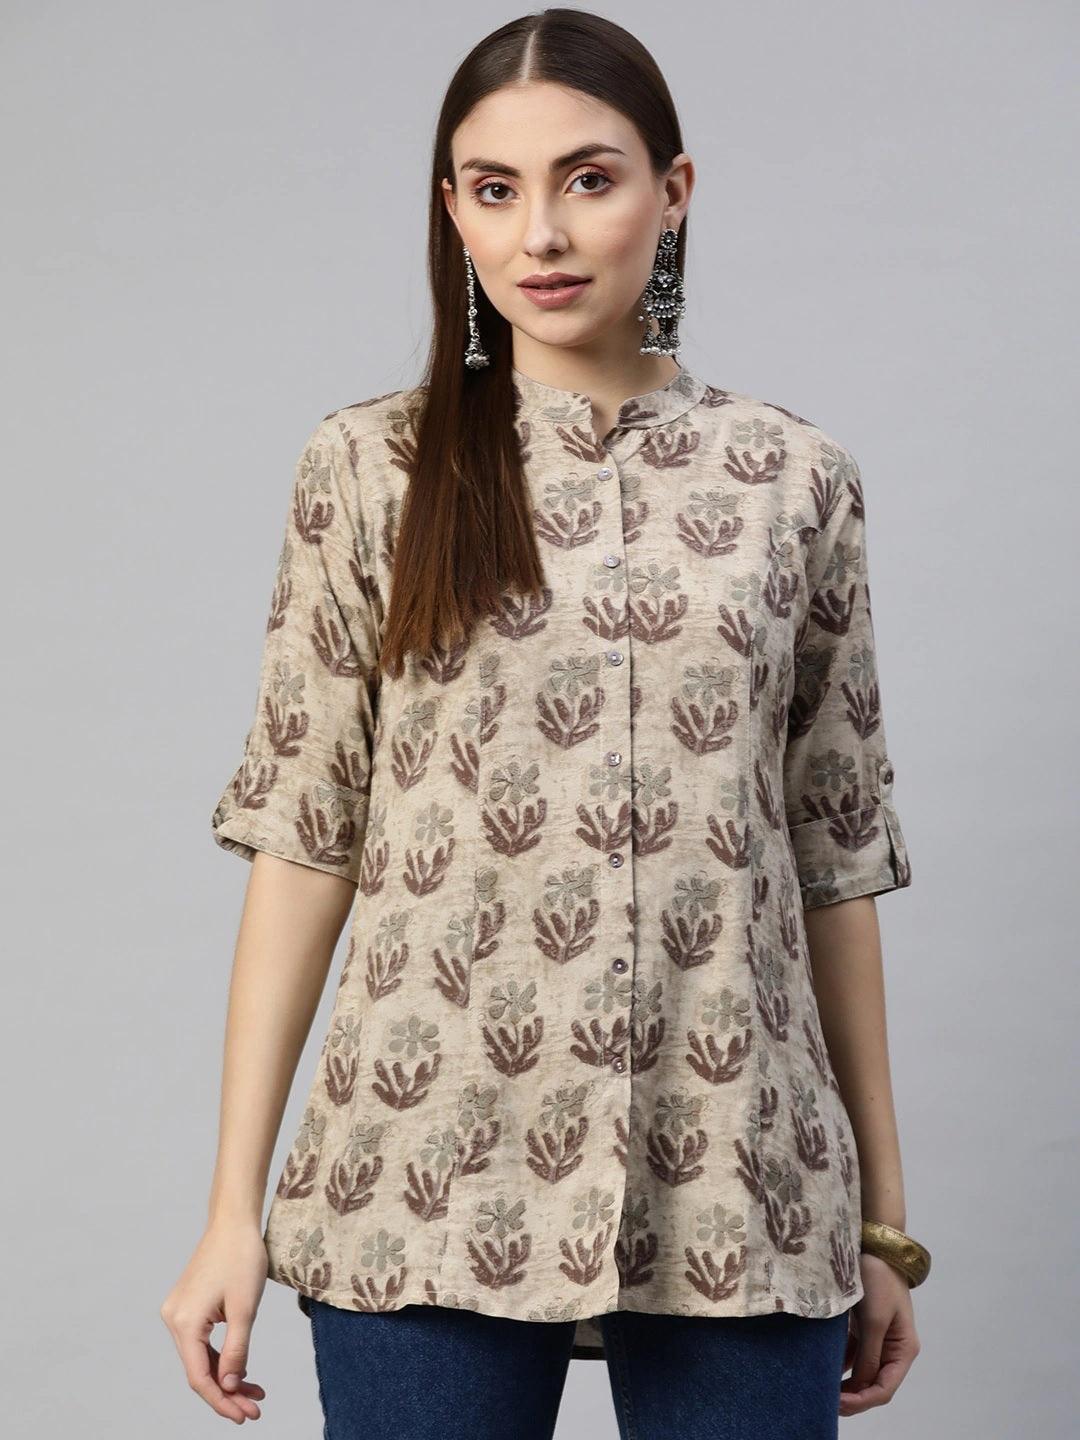 Divena Brown Floral Rayon A-Line Shirt Style Top - divena world